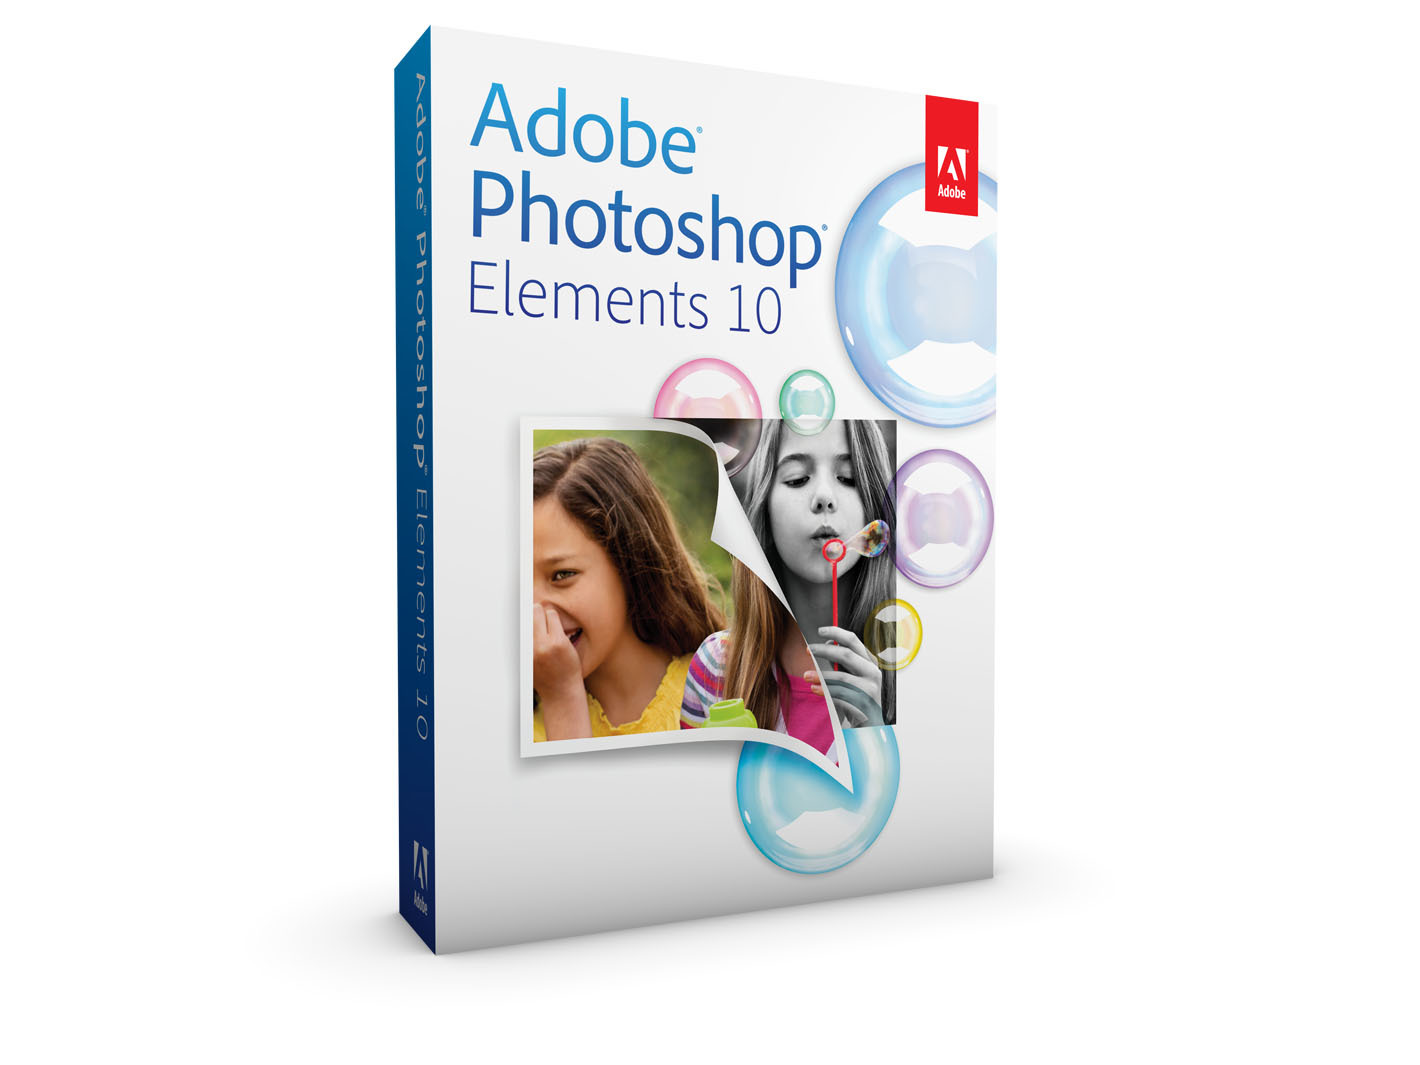 Adobe Photoshop Elements 10 engelsk fullversjon